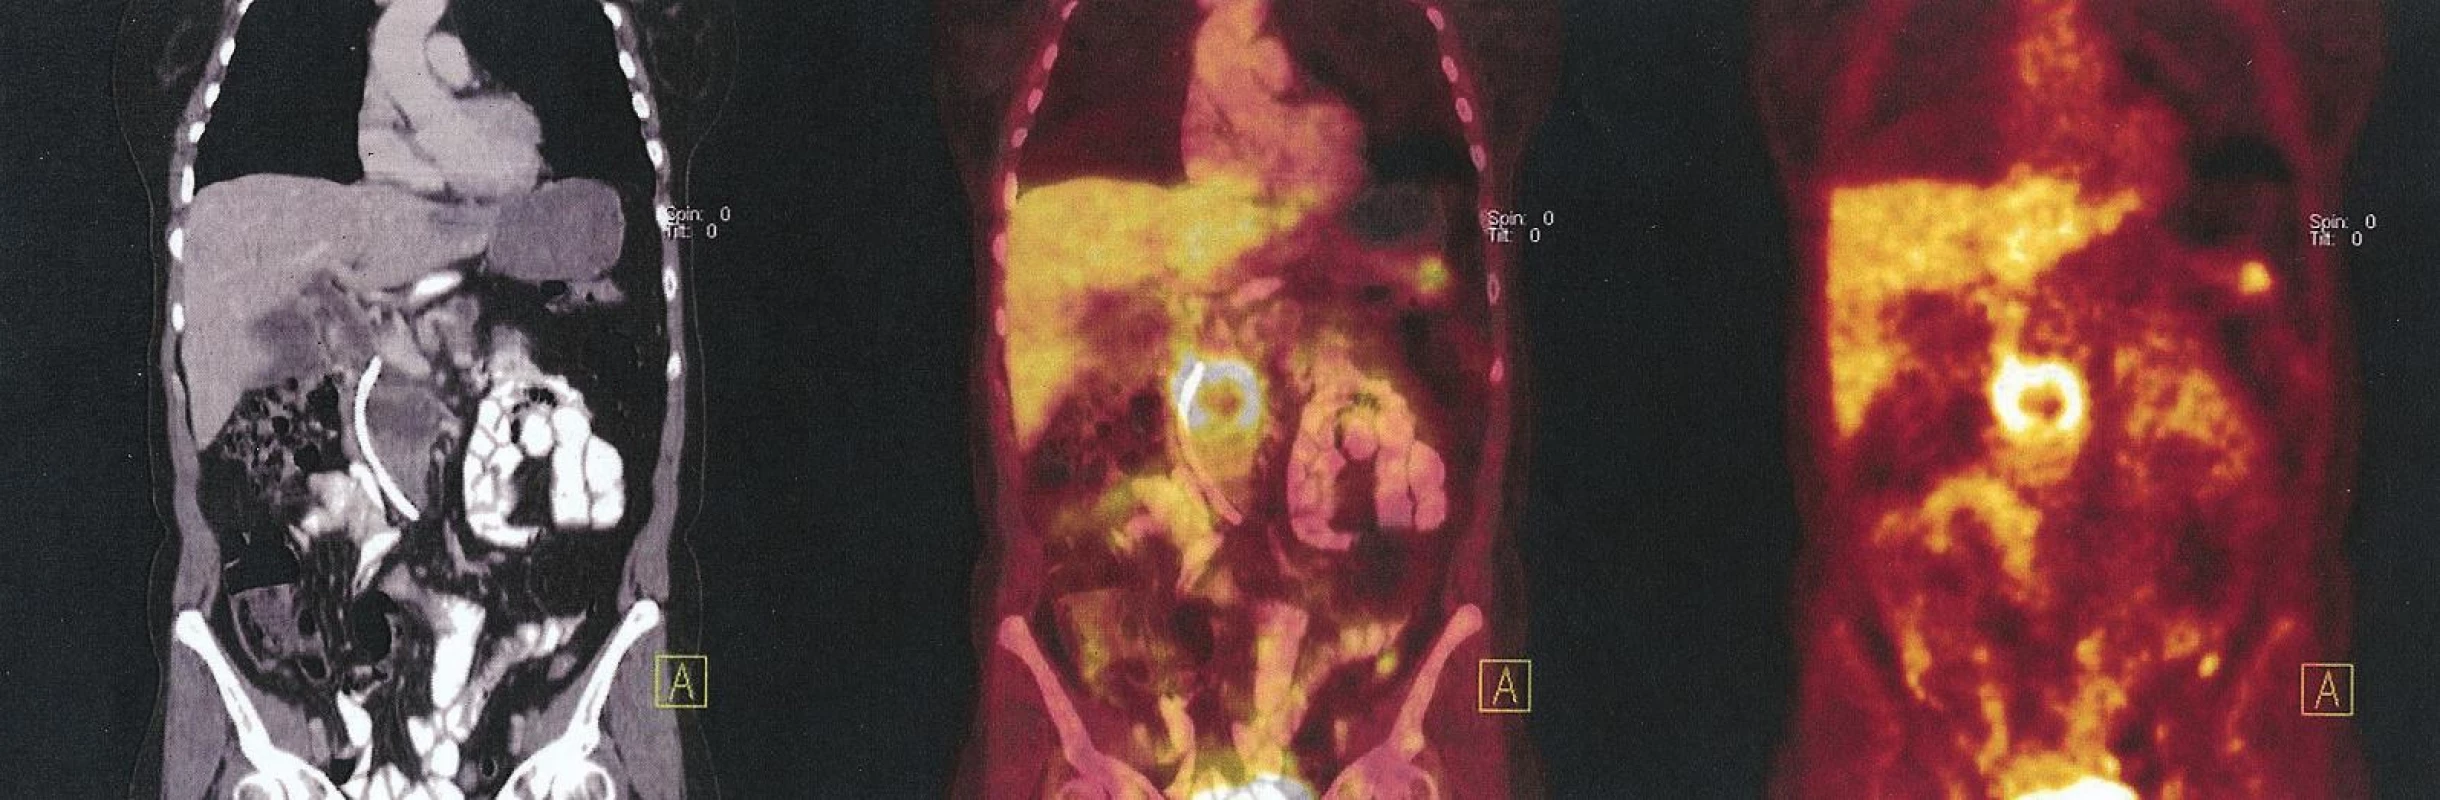 Benigní cystadenom kaudy pankreatu. V CT fázi ložisko v kaudě, bez korelátu v PET fázi
Fig. 3. Benign cystadenoma of the cauda. The CT phasebearing in the cauda without correlate on the PET phase